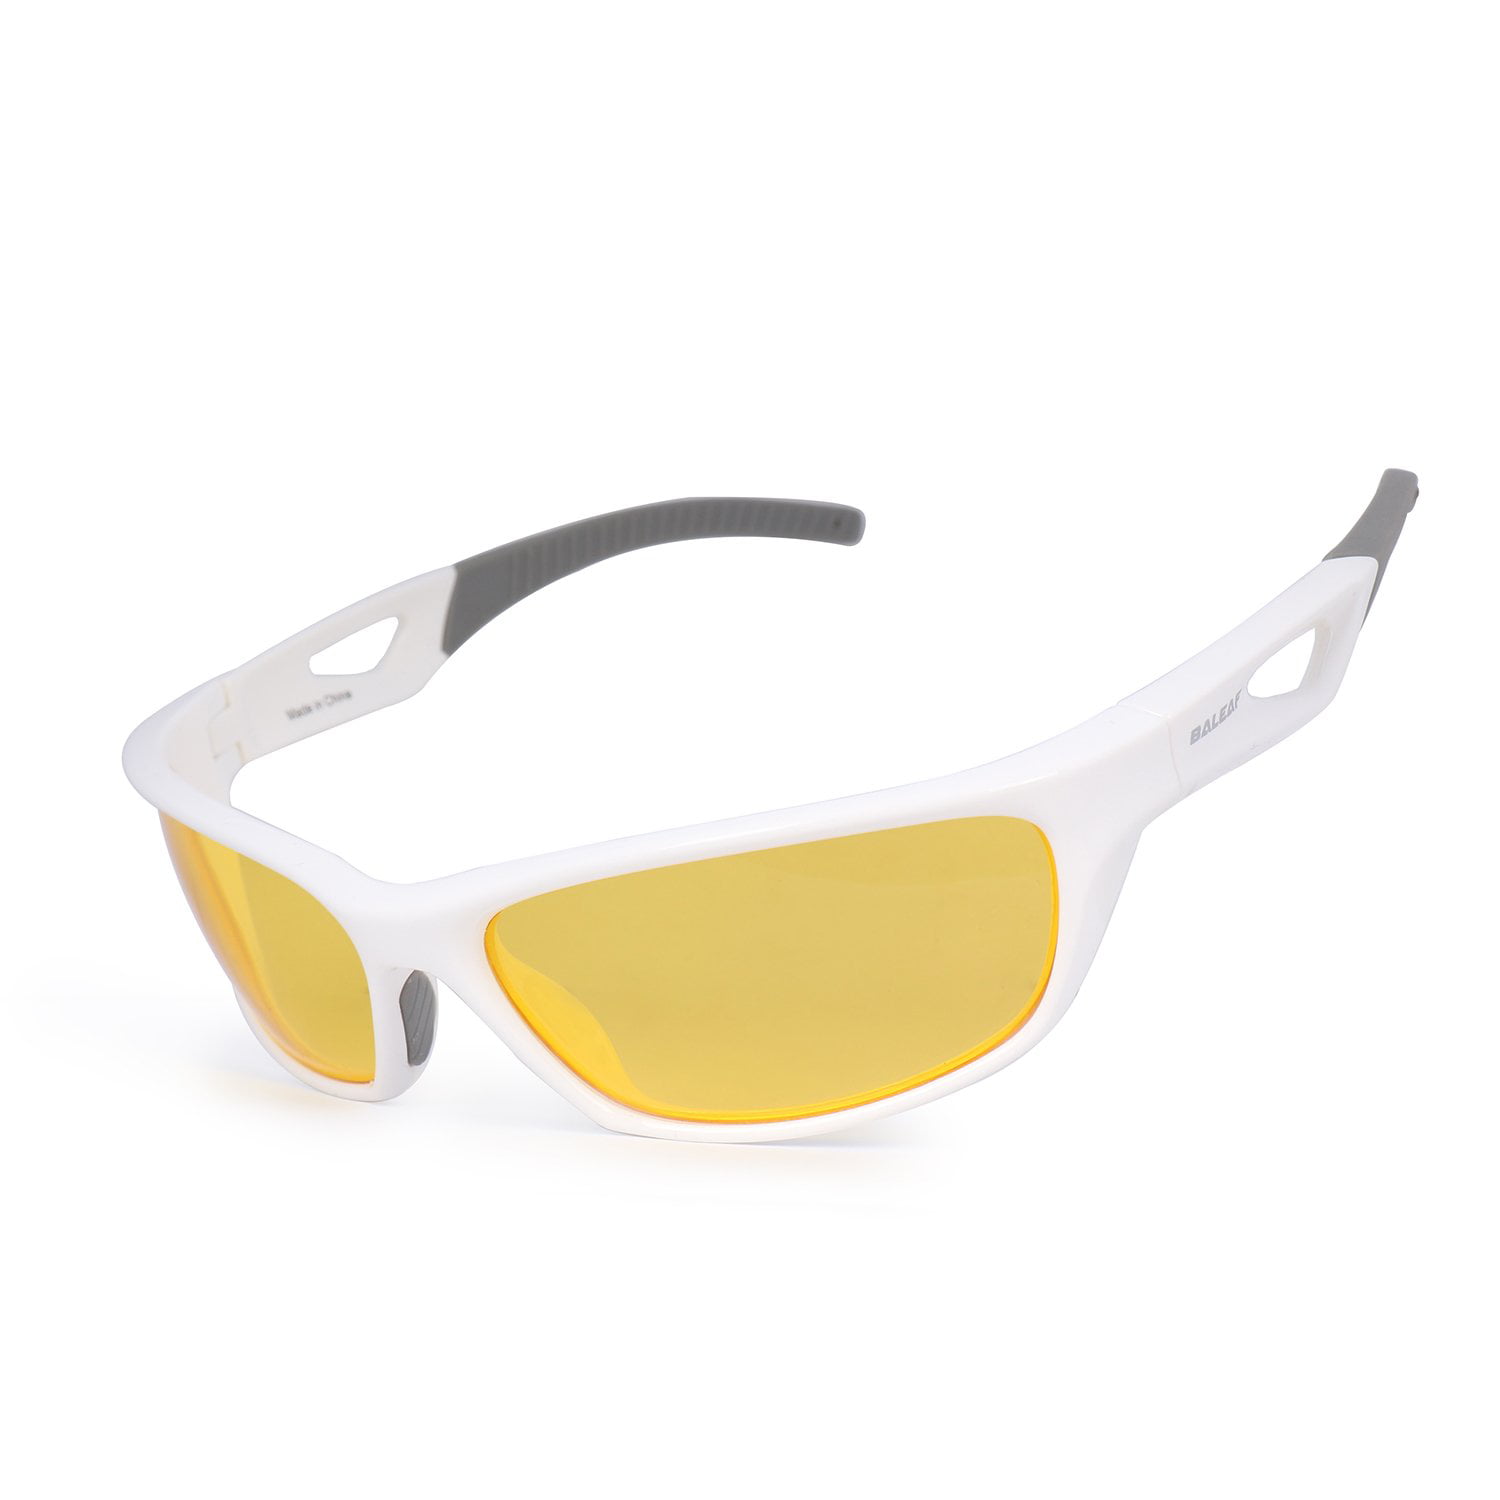 BALEAF Sports Polarized Sunglasses for Men Women UV400 Protection Lightweight Cycling Running Driving Fishing Eyewear 